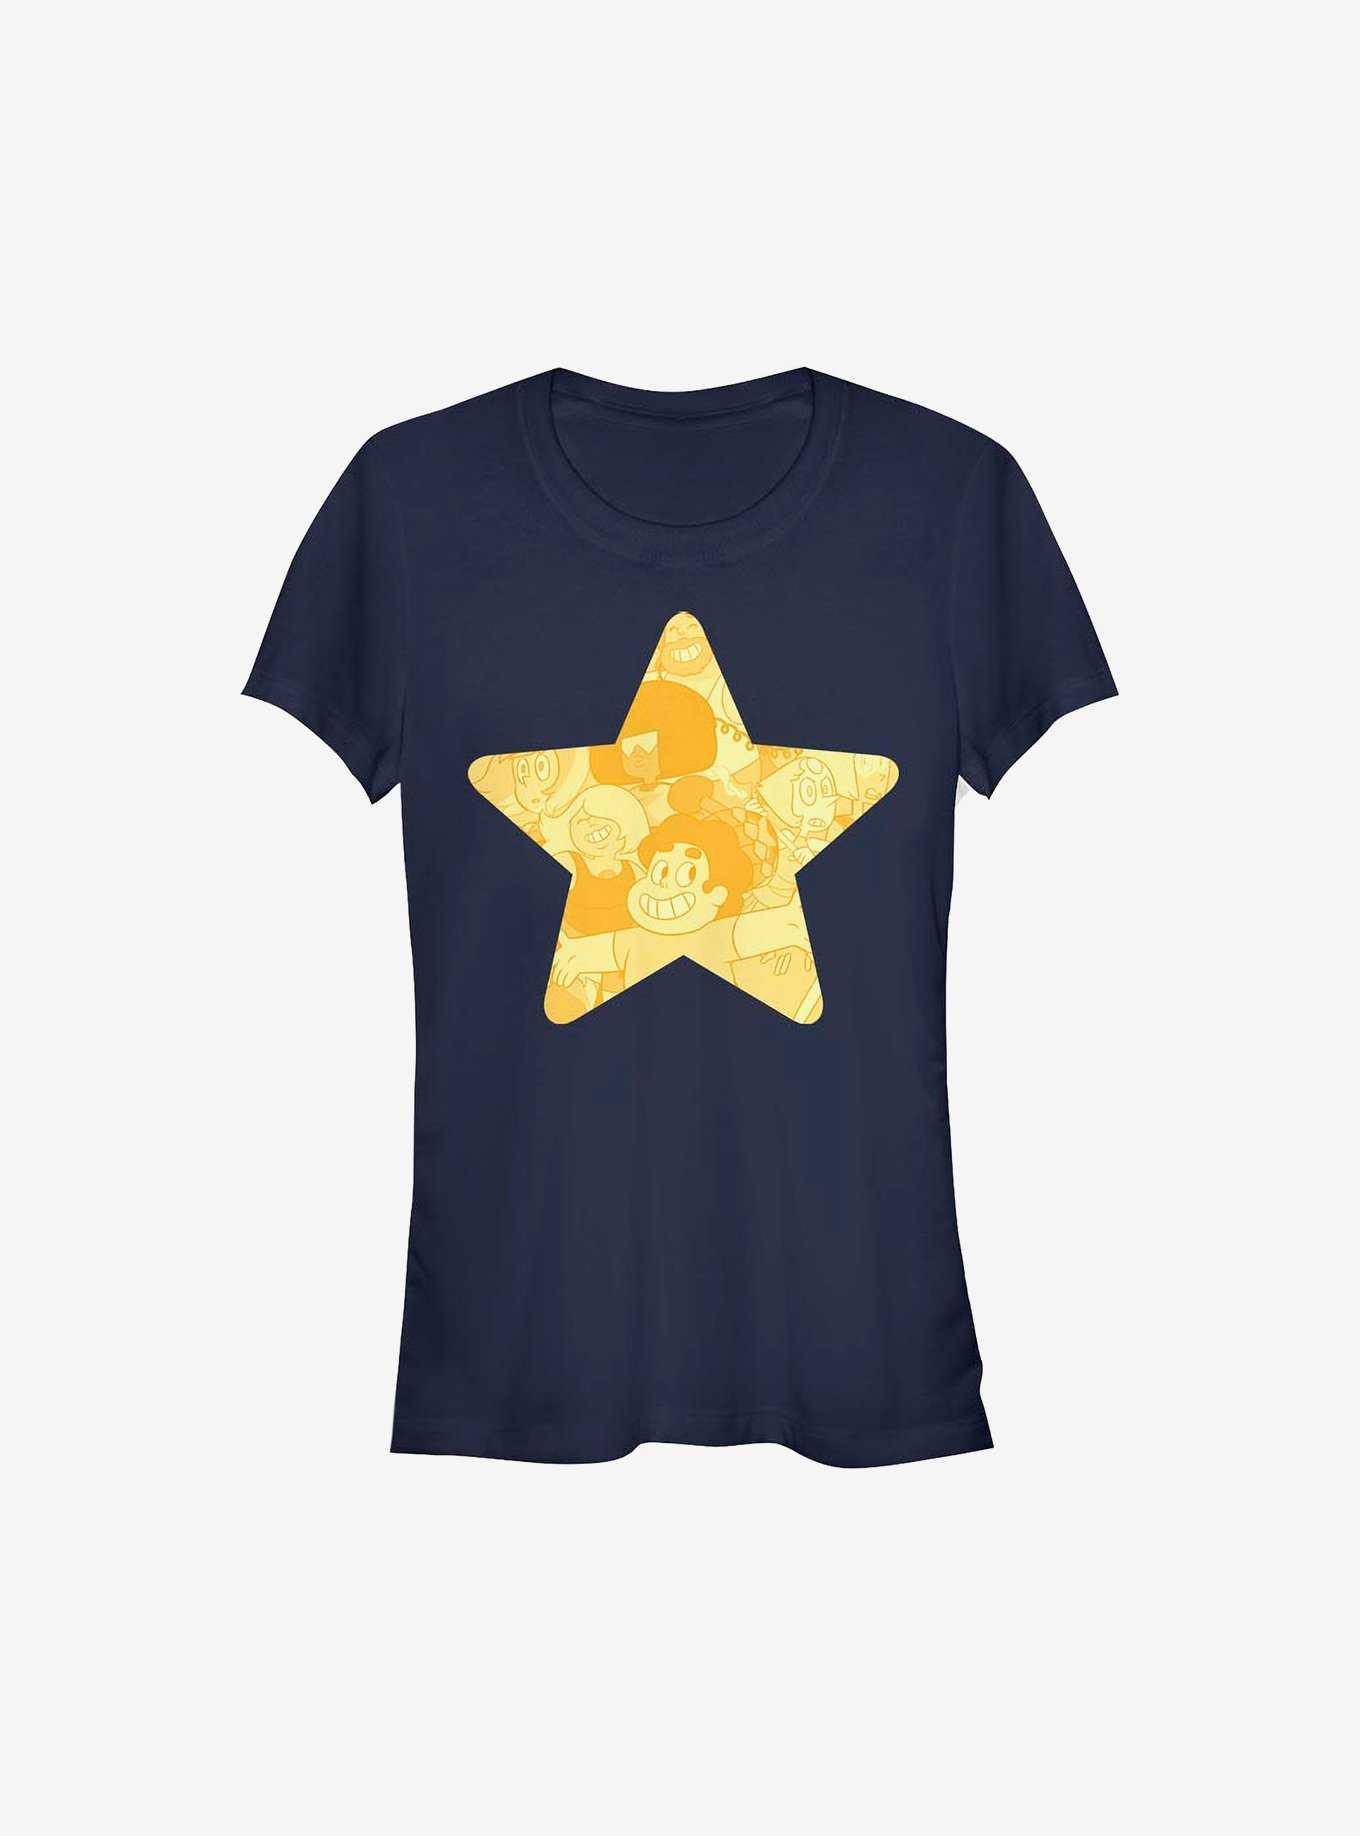 Steven Universe Steven Star Girls T-Shirt, , hi-res